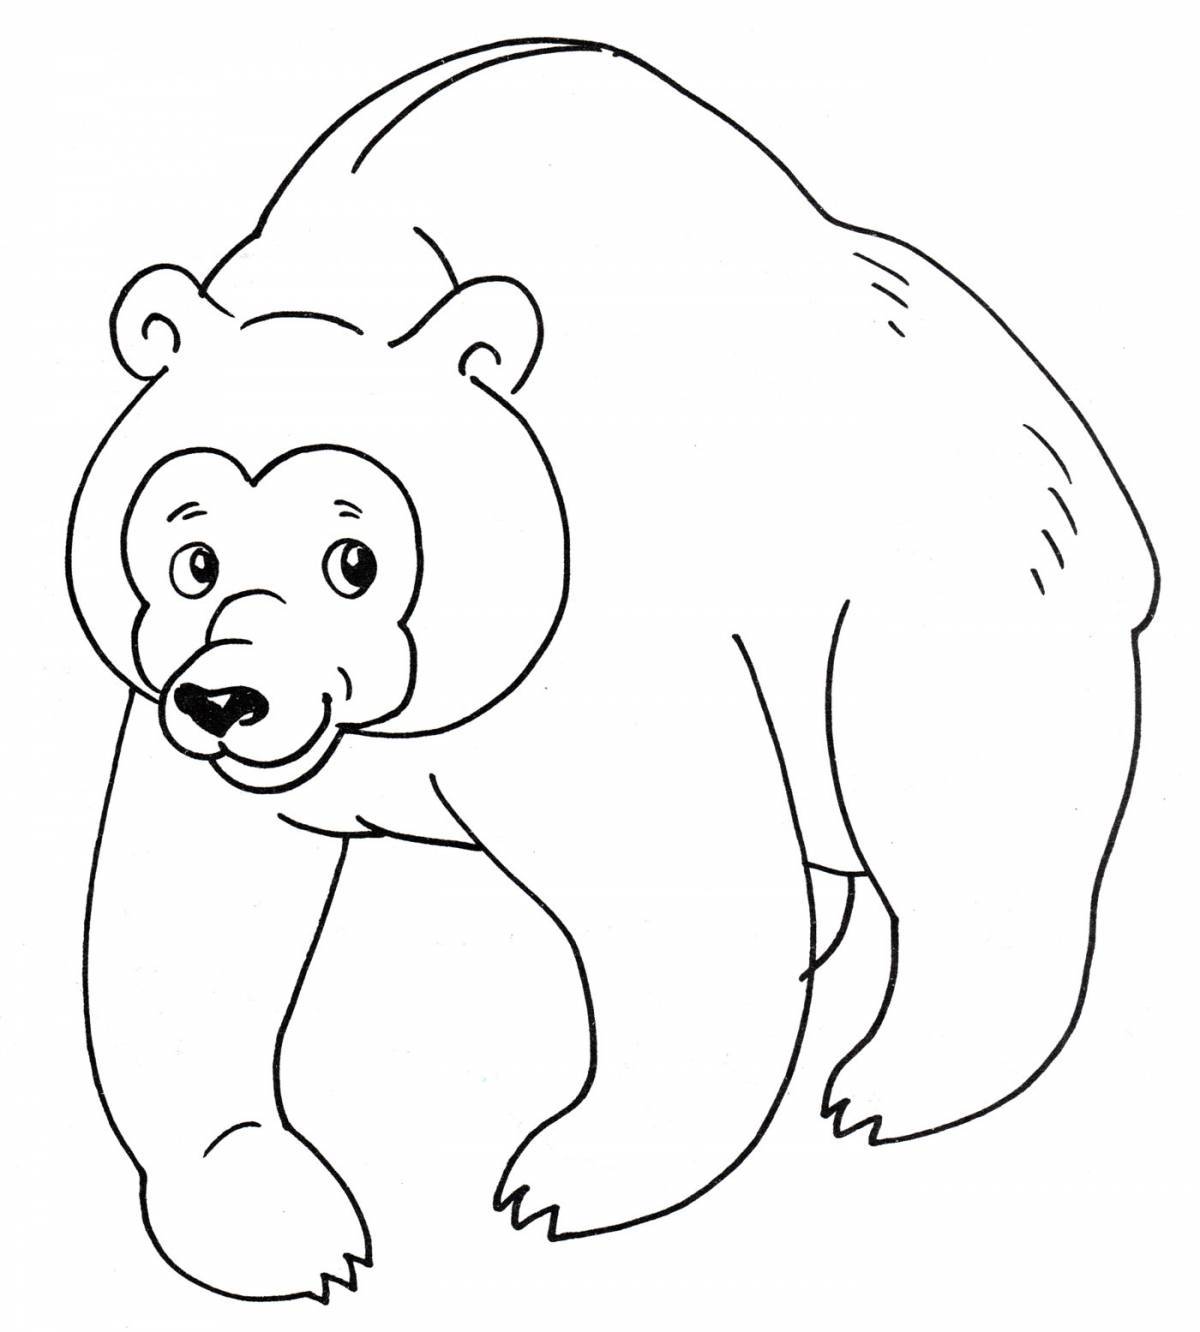 Adventurous bear coloring book for kids